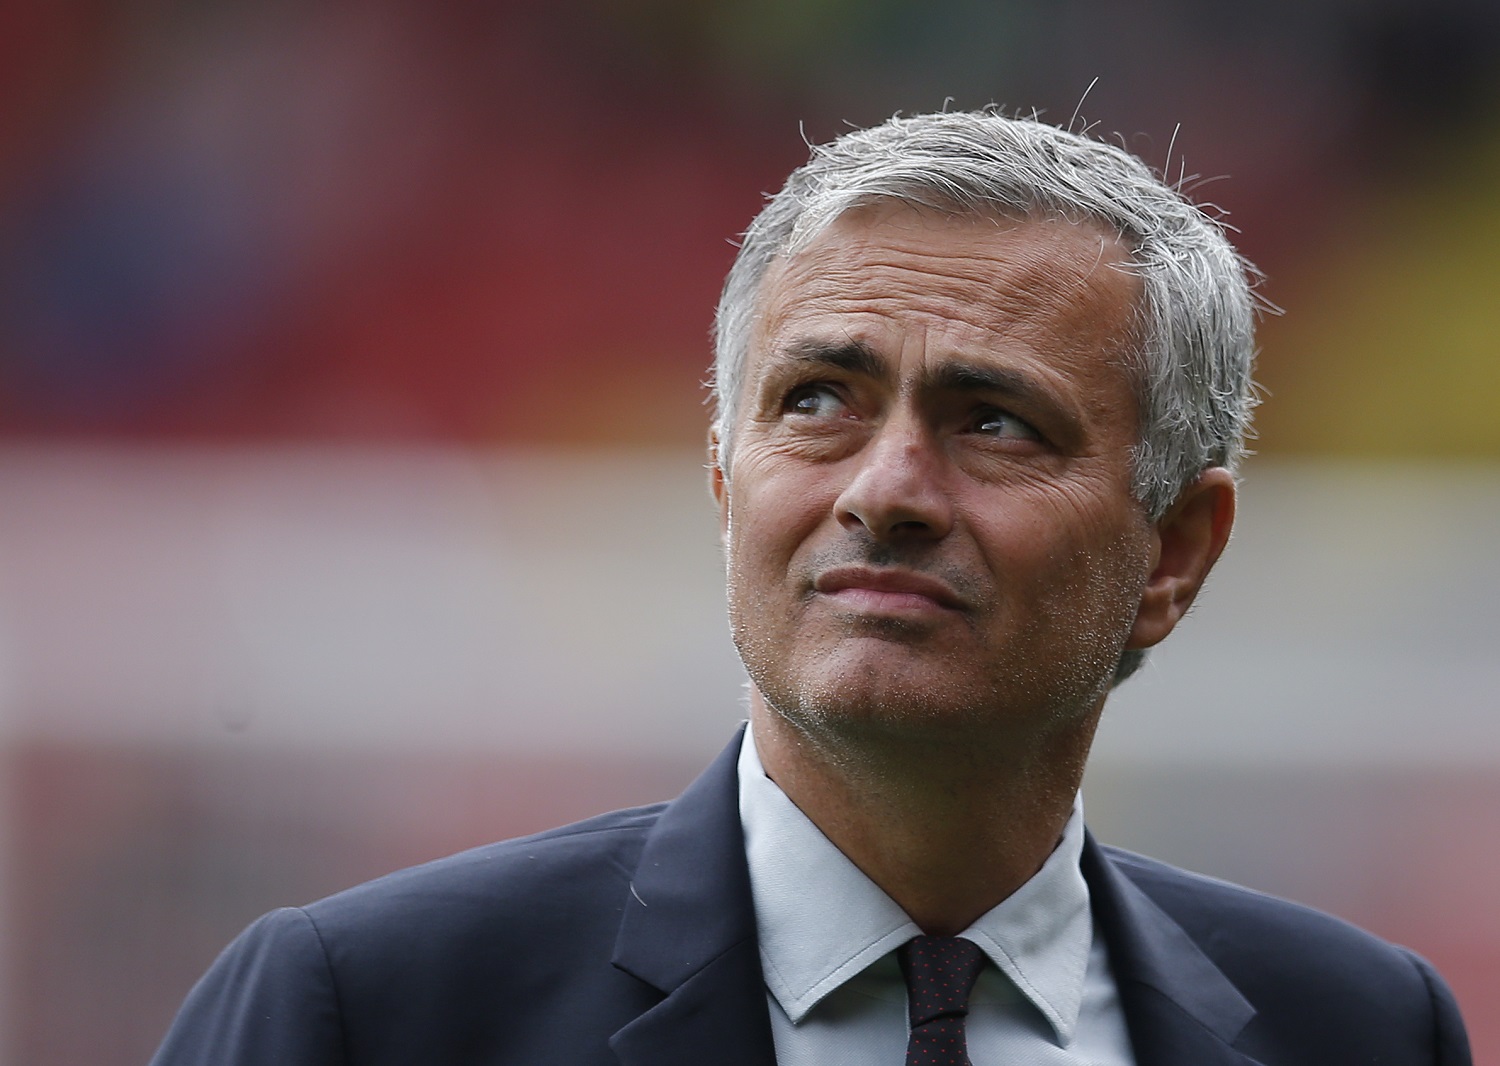 Mourinho luce infeliz ante su primera crisis con Manchester United